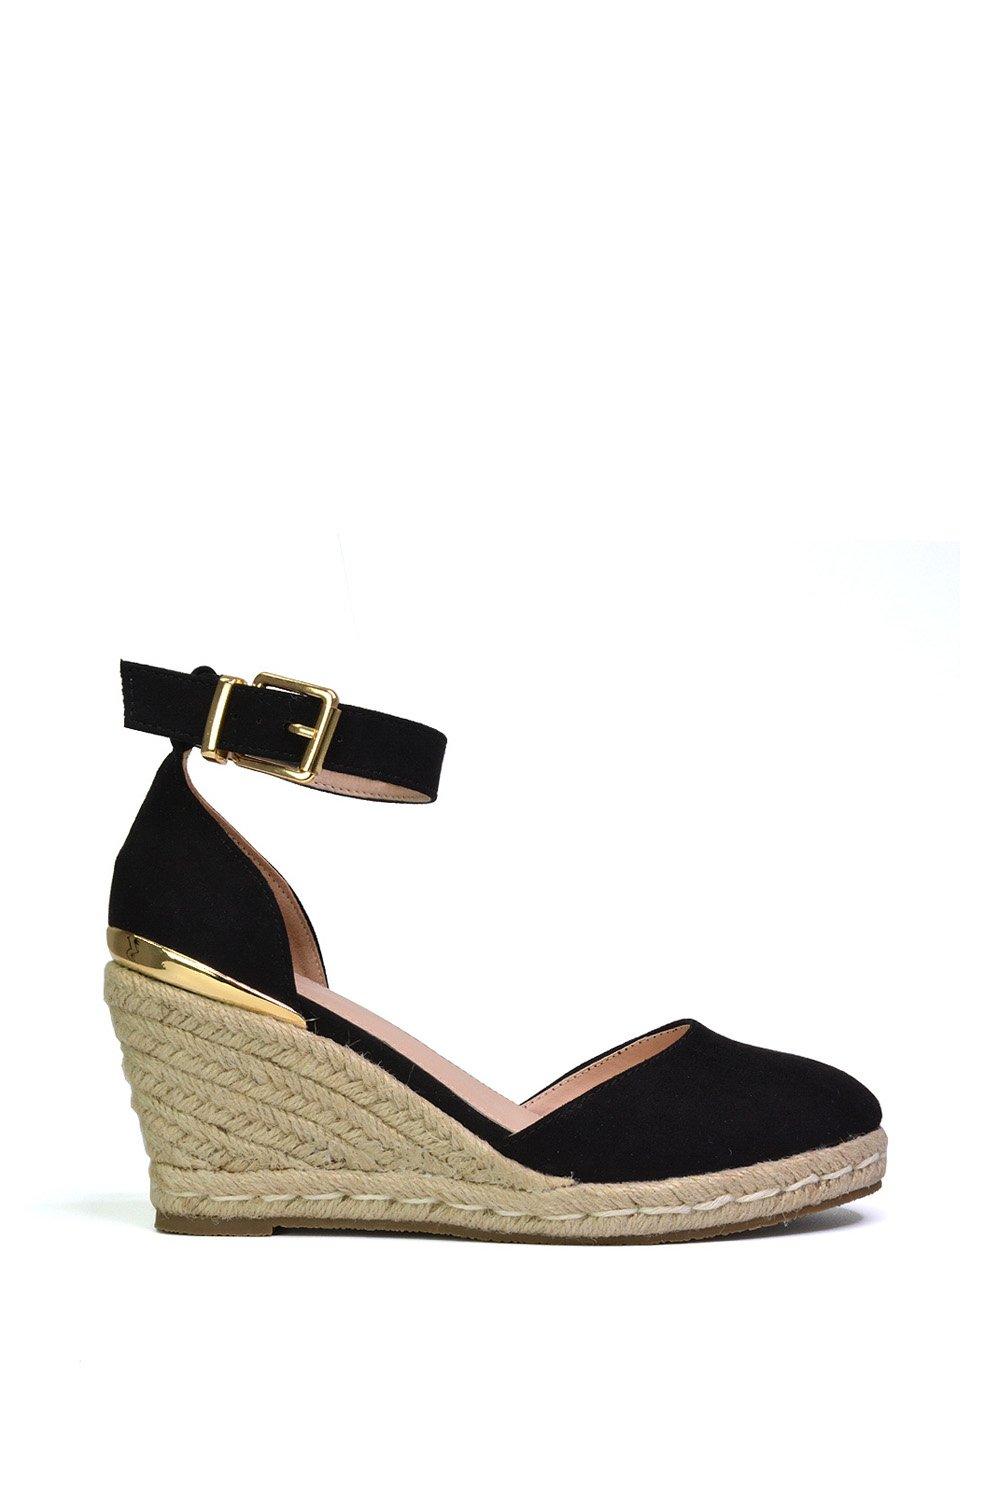 Gold Closed Toe Espadrille Wedge Heel Sandals | New Look